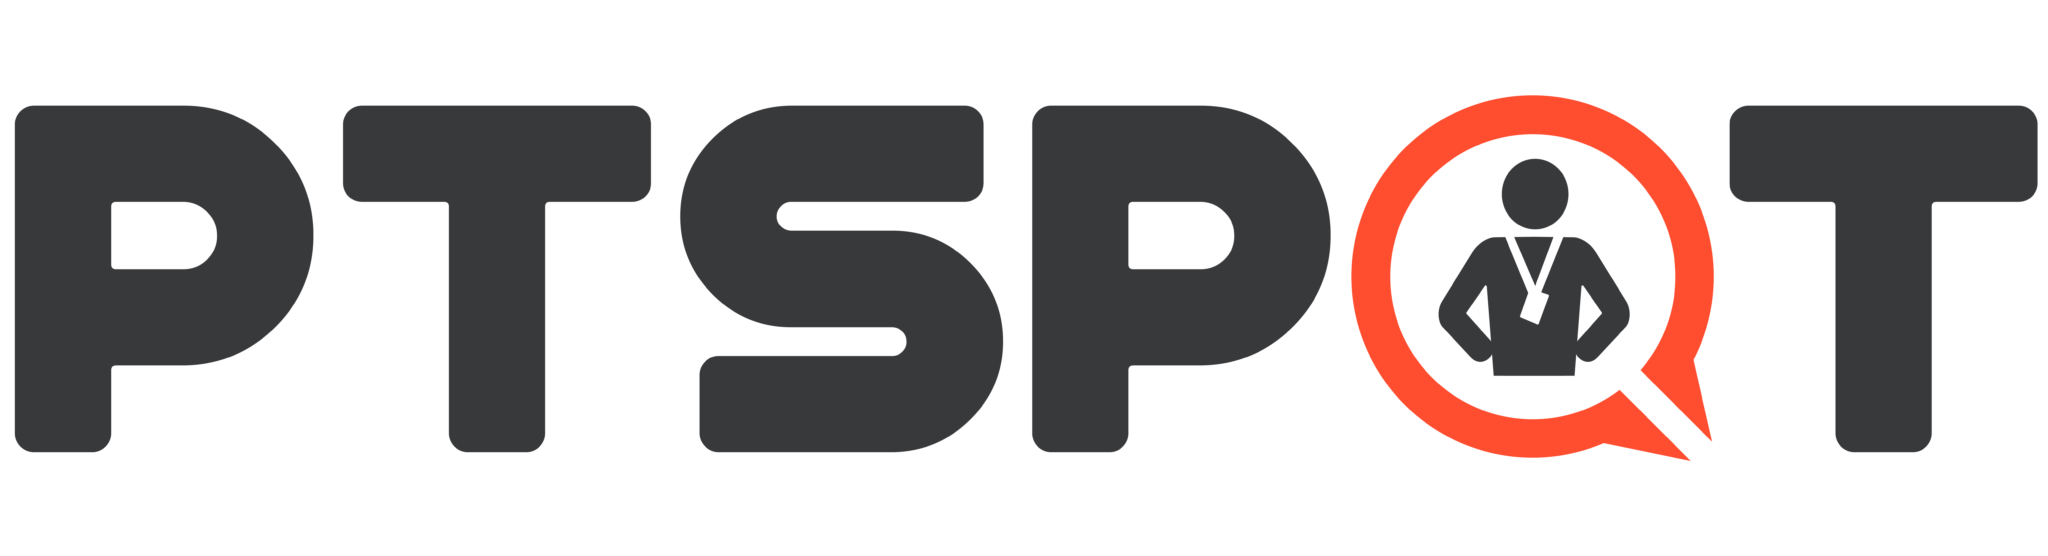 pt spot logo